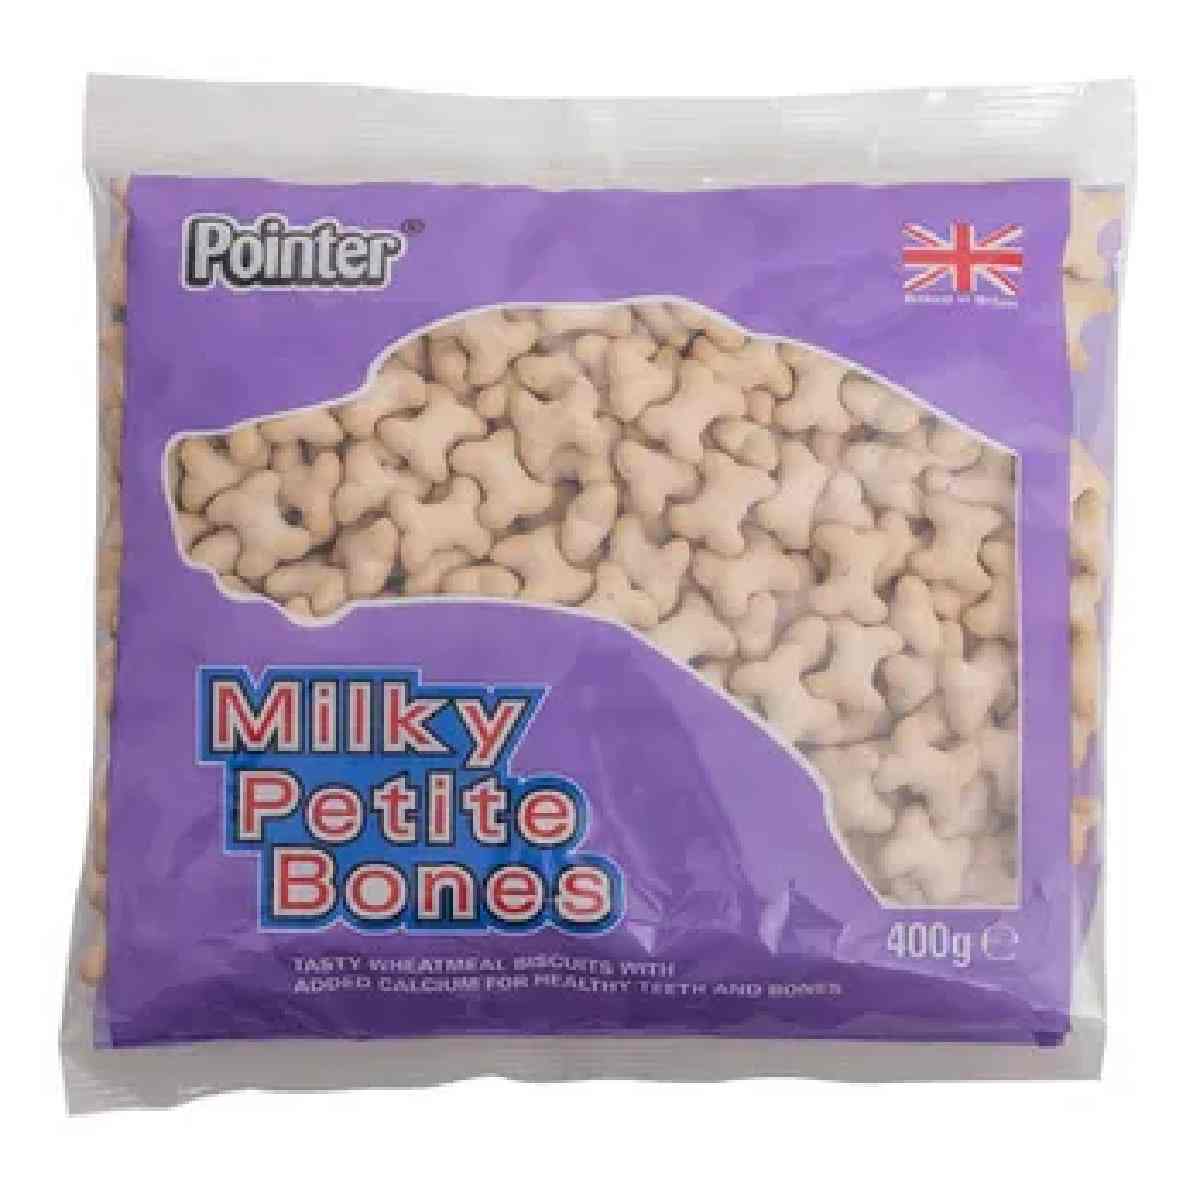 Pointer milky petite bones